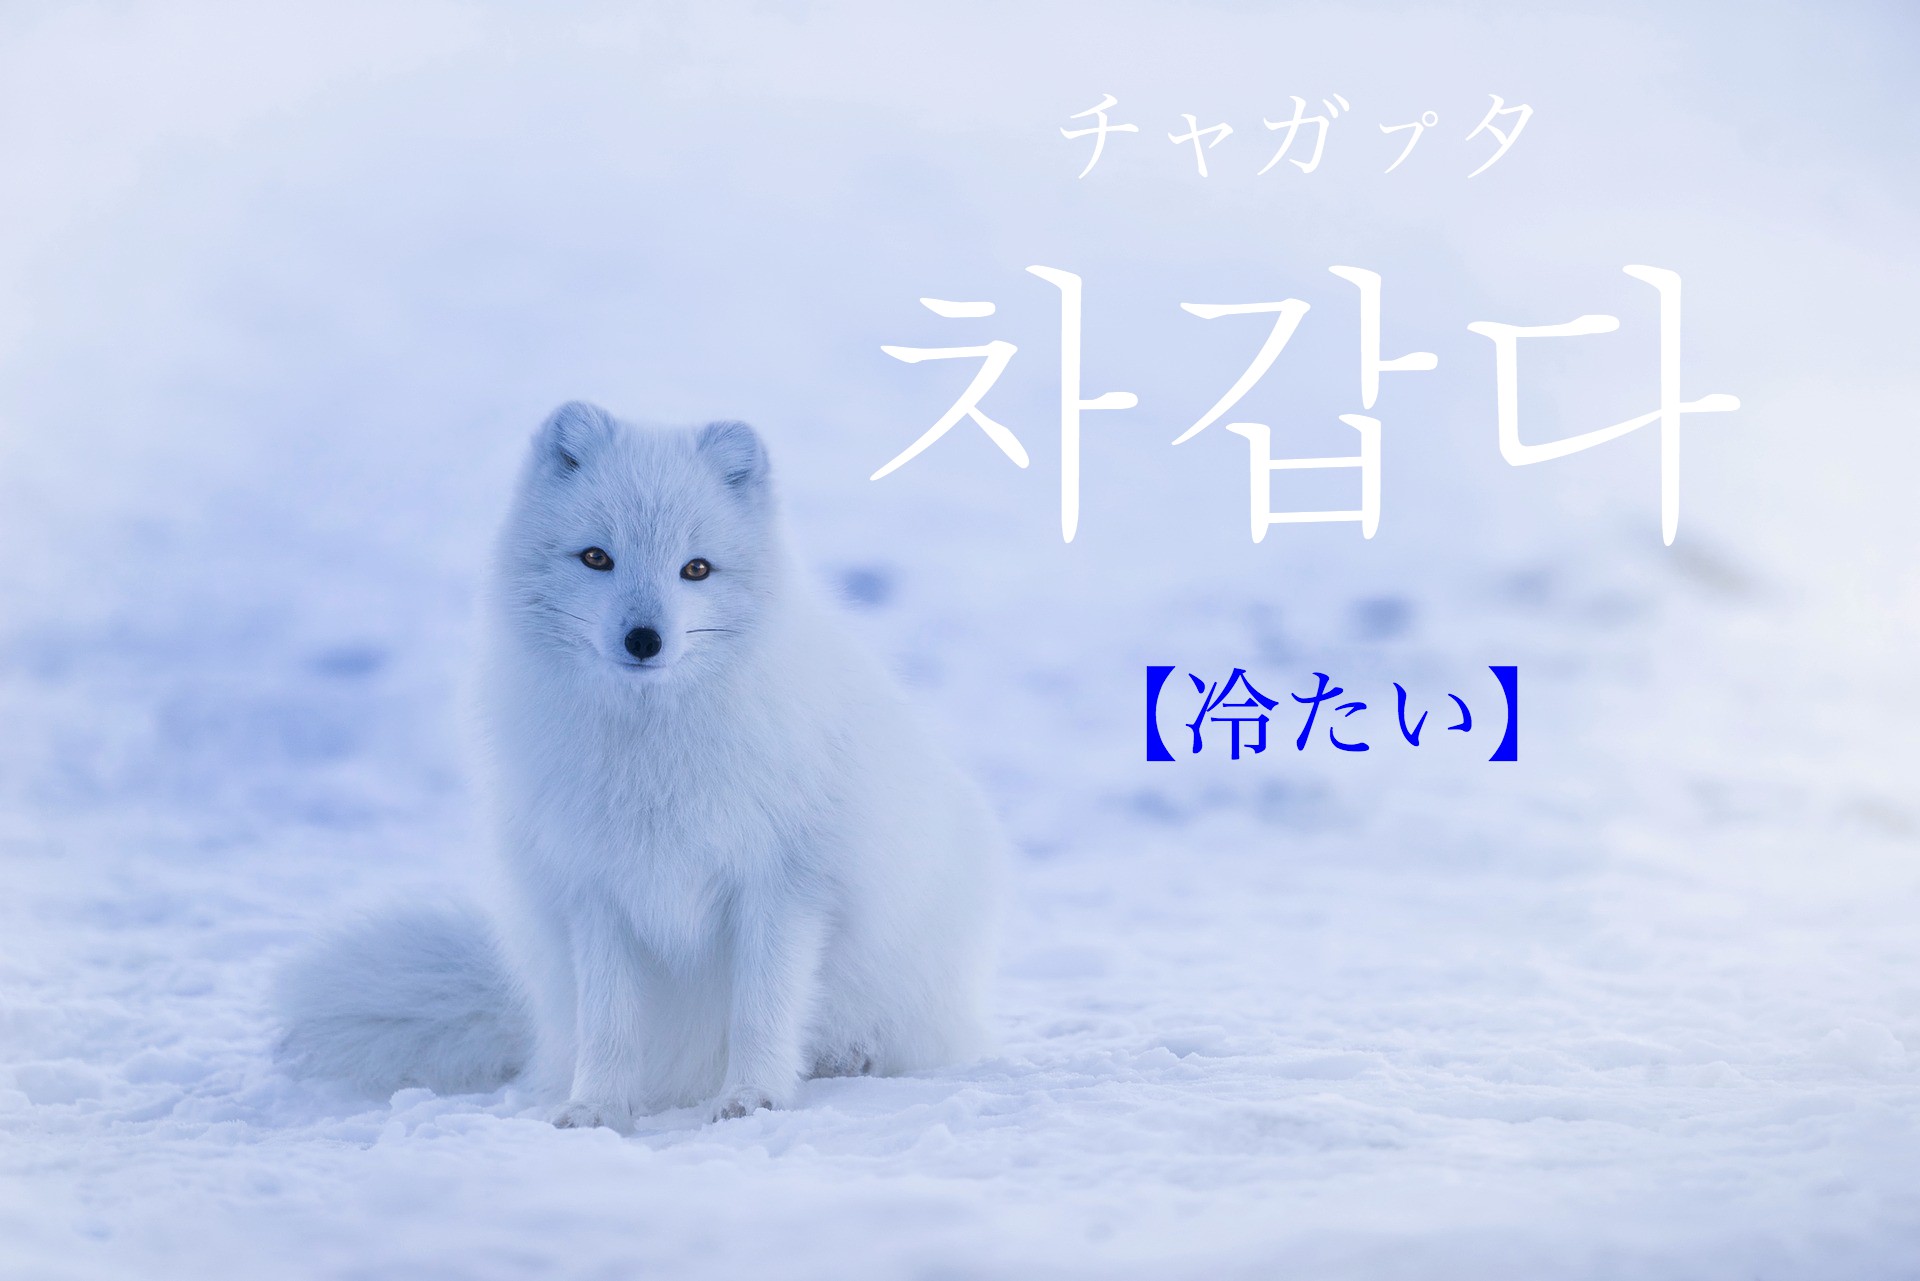 koreanword-cold